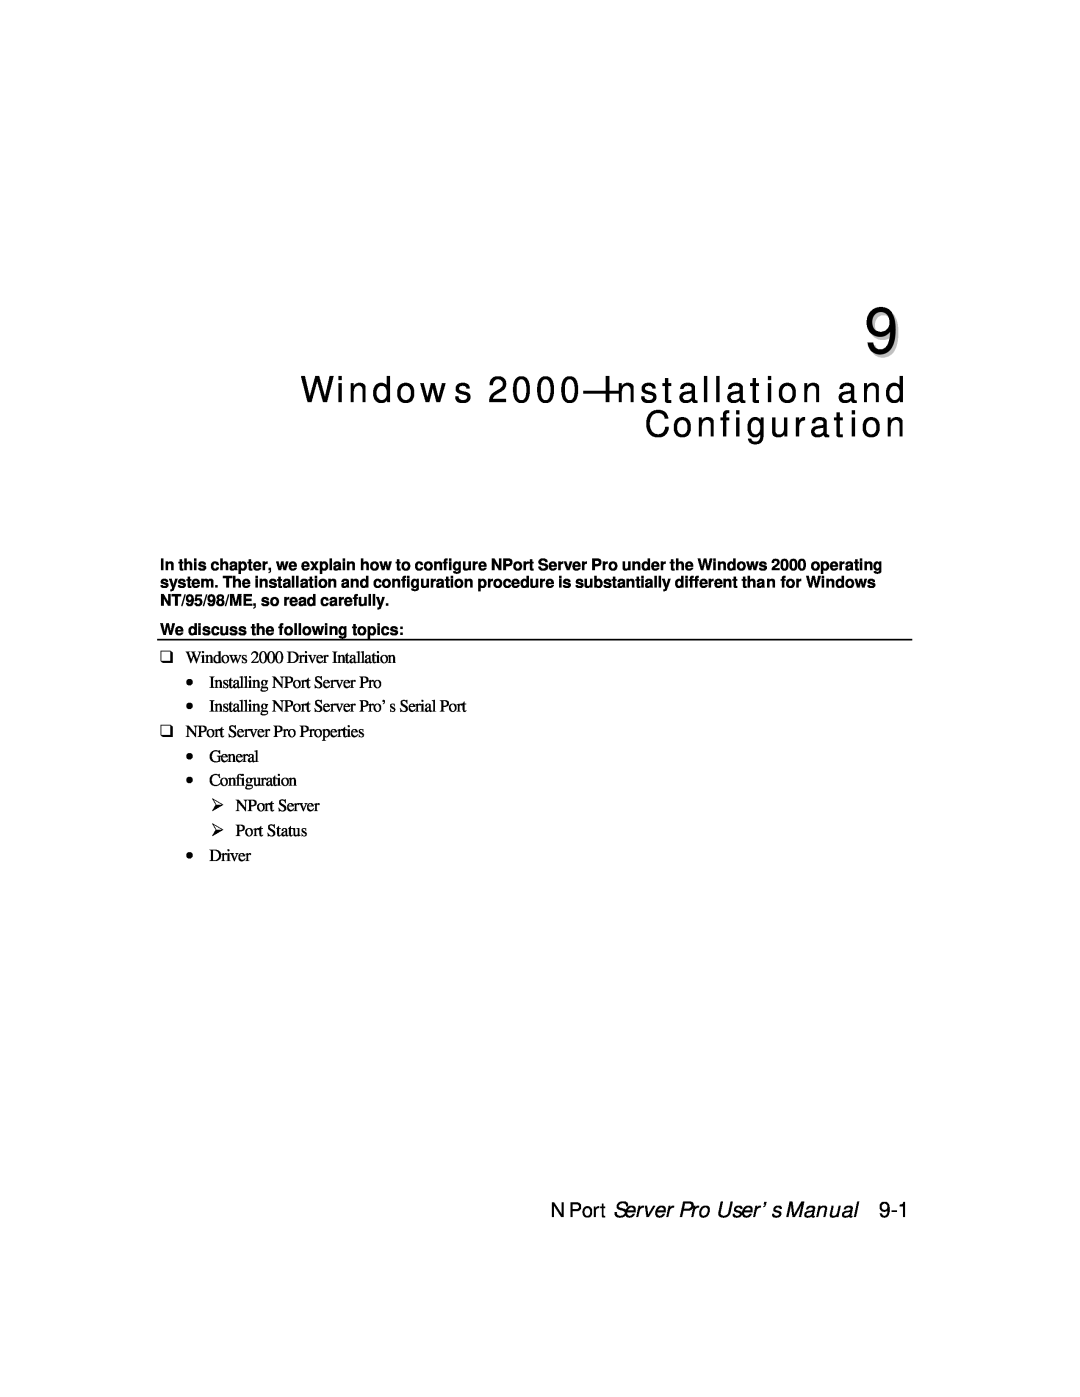 Moxa Technologies DE-308, DE-303 manual Windows 2000-Installation and Configuration, NPort Server Pro User’s Manual 